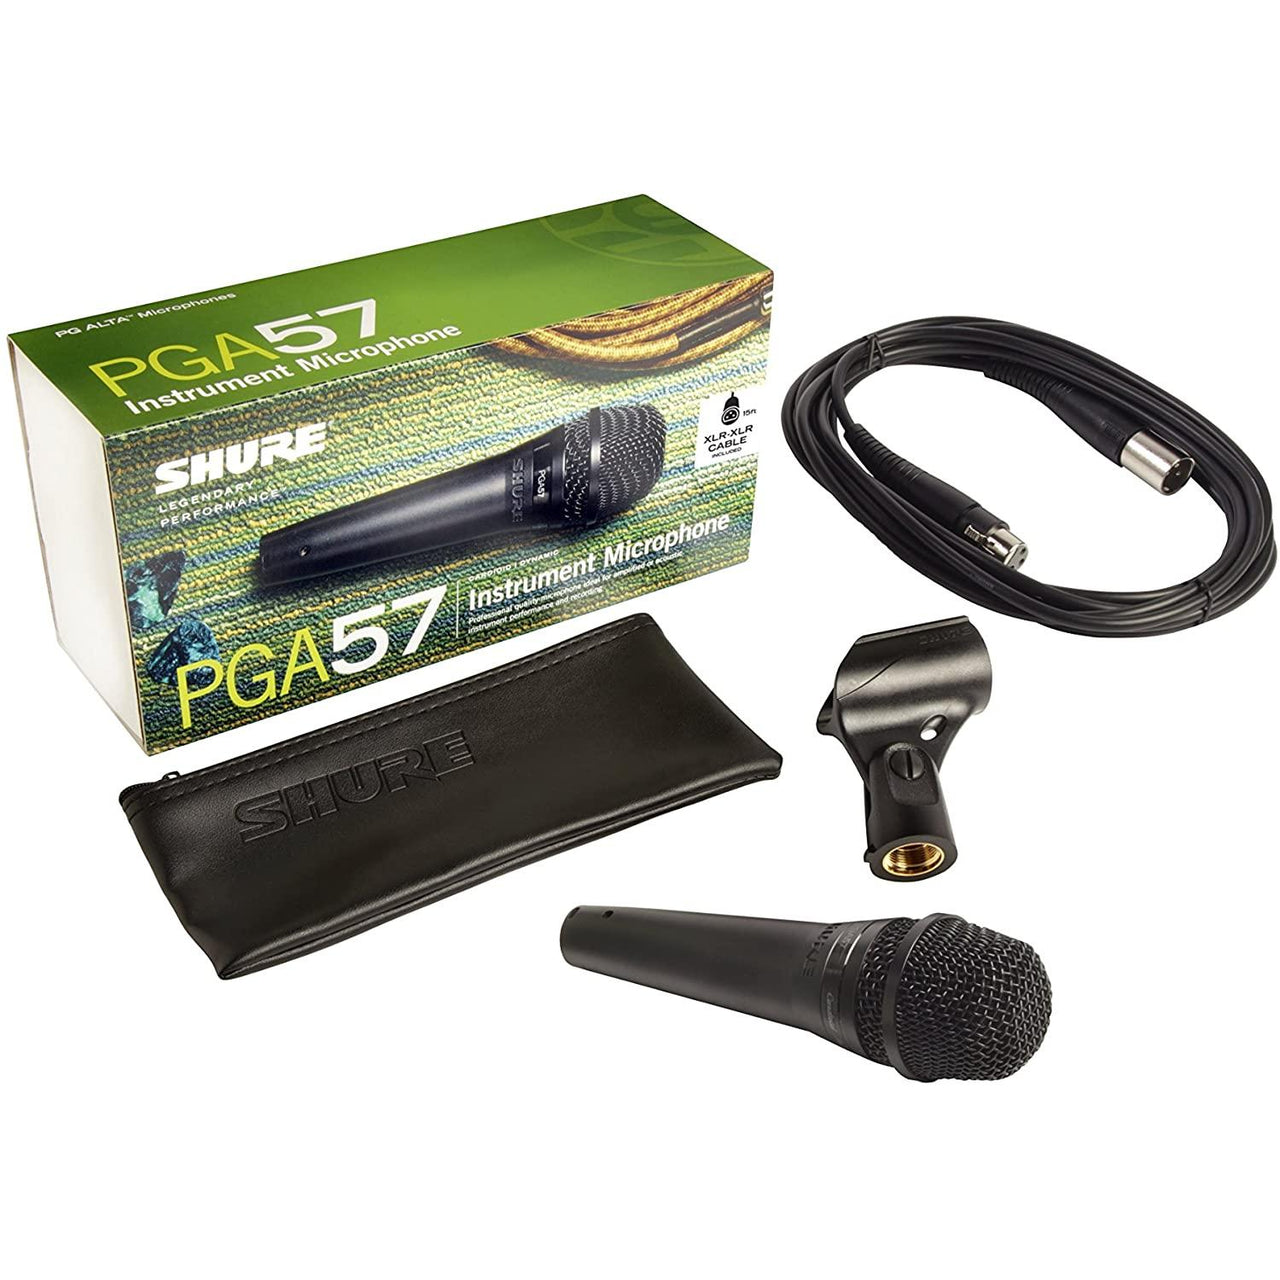 Microfono Dinamico Shure C/Cable Xlr,Bolsa Y Soporte, Pga57-Xlr